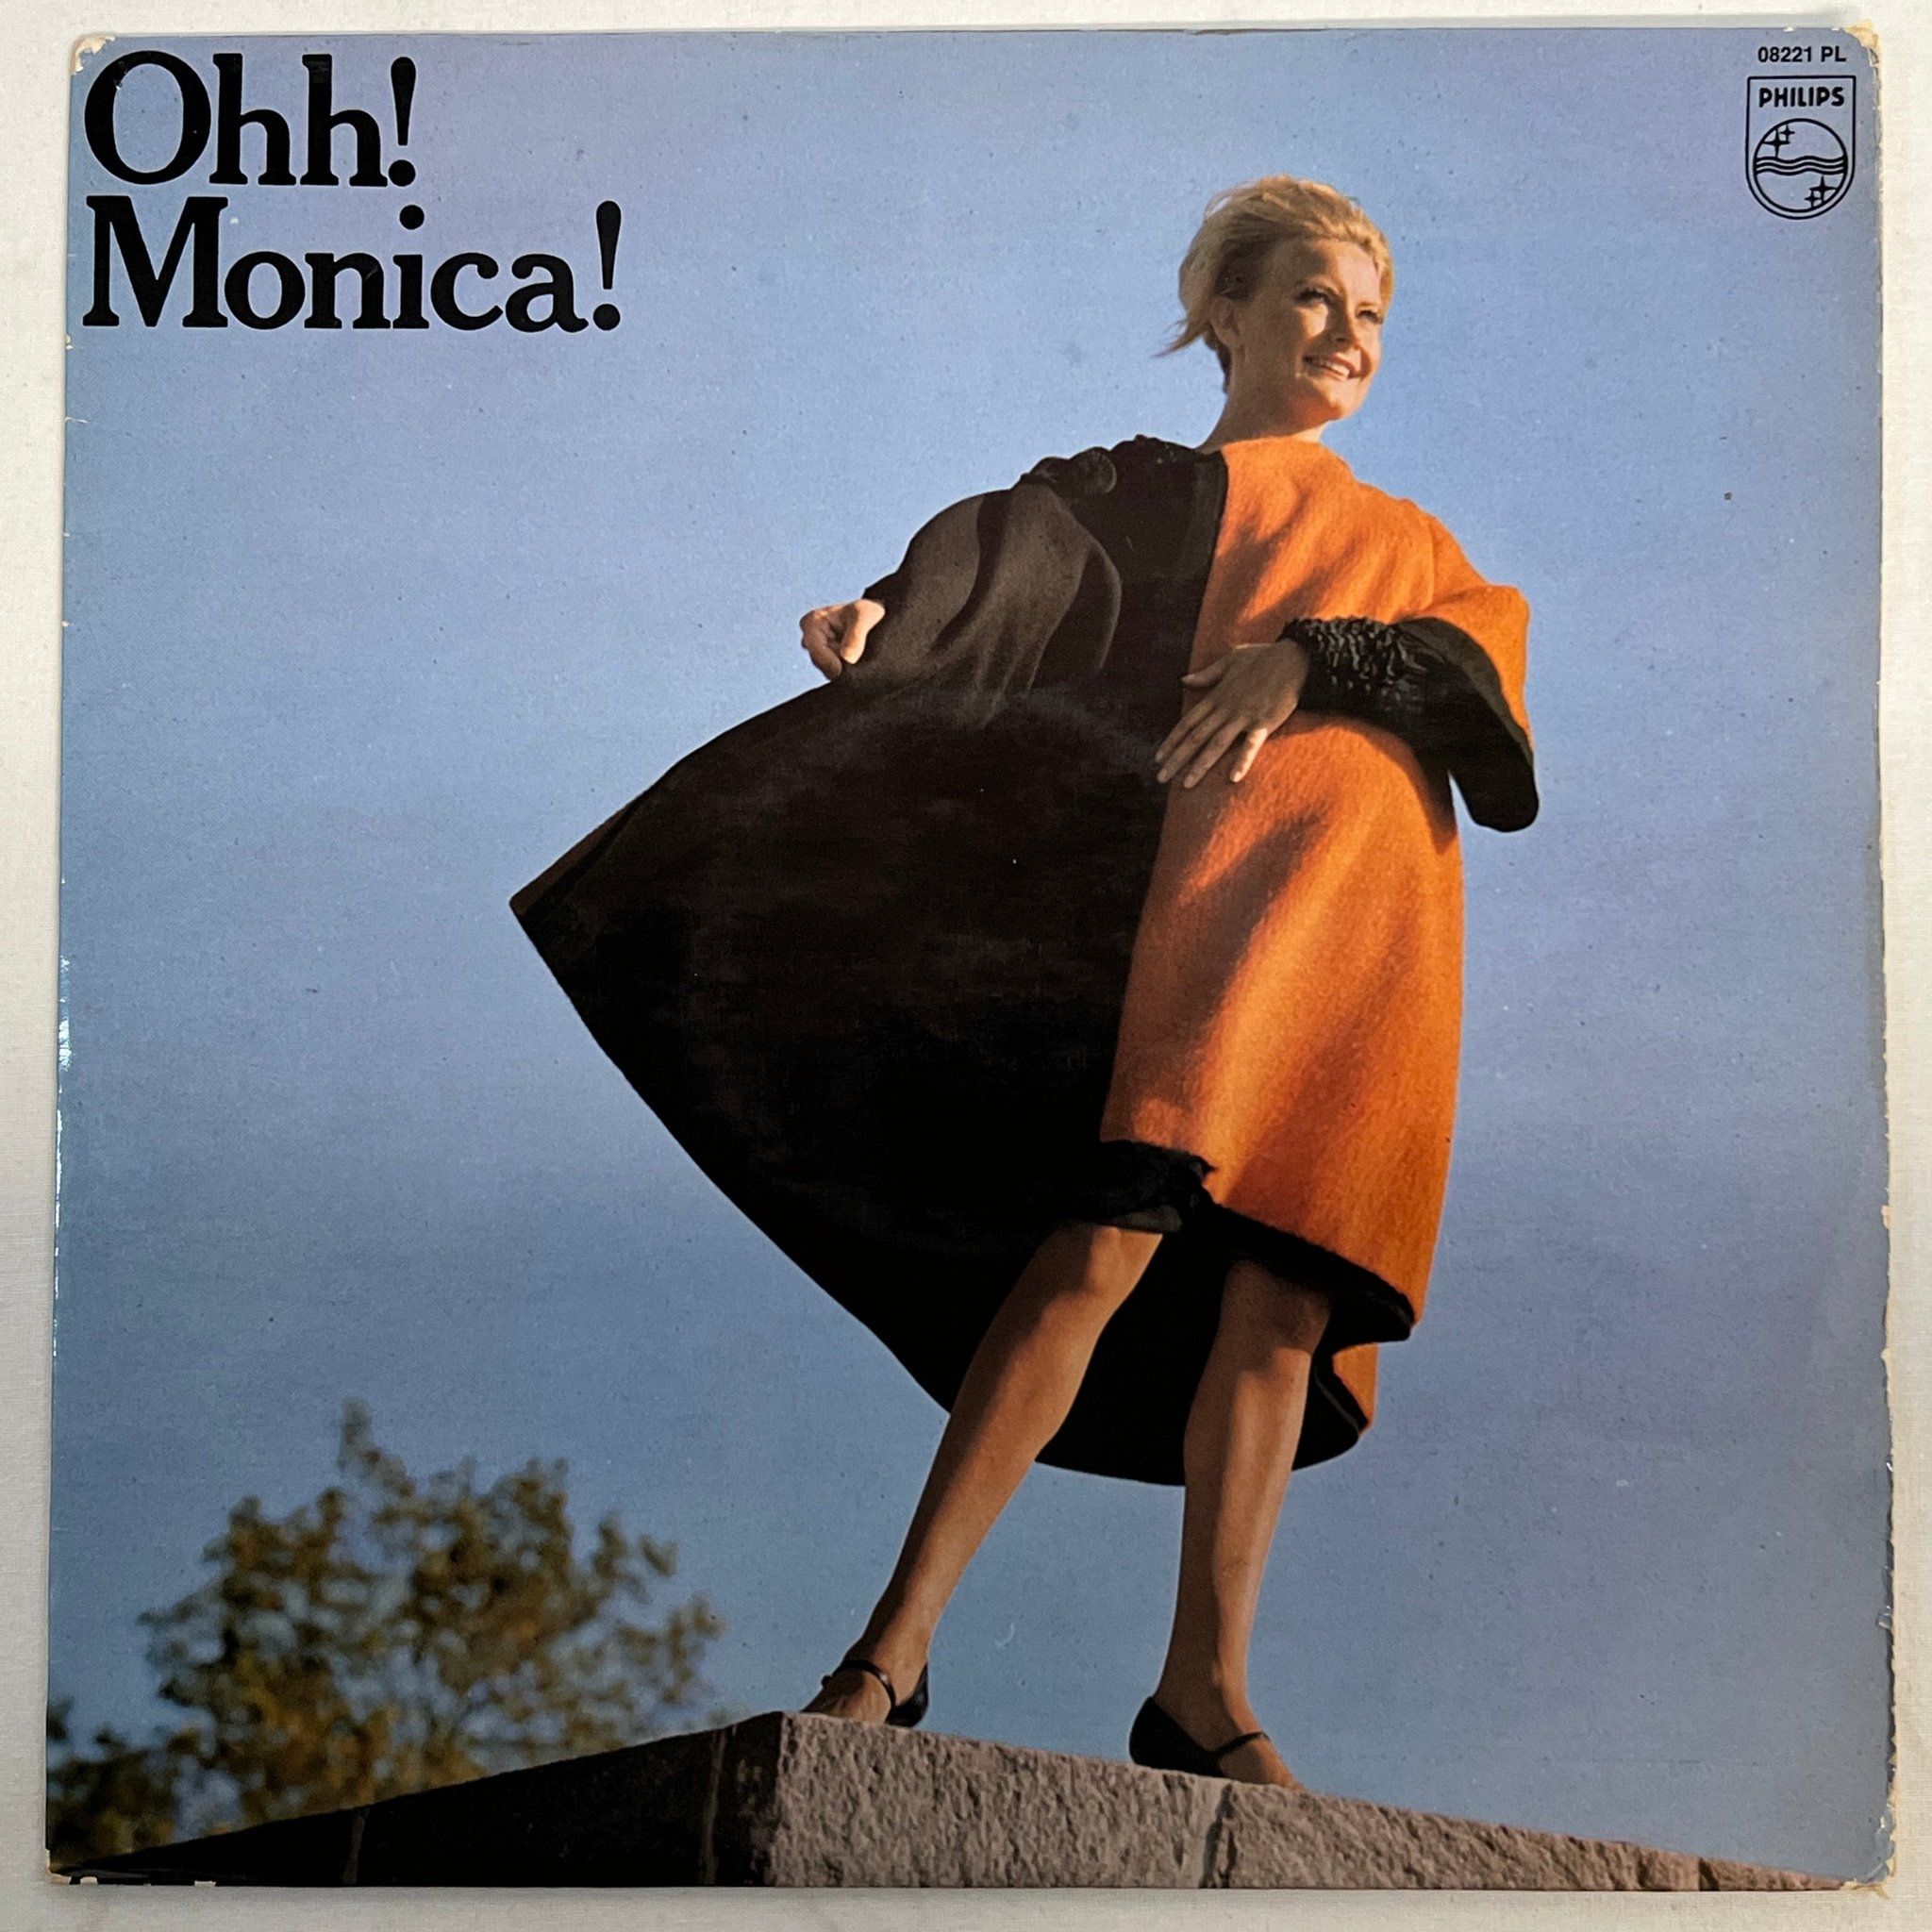 Omslagsbild för skivan MONICA ZETTERLUND Ohh! Monica! LP -64 Swe PHILIPS 08221 PL ** rare **